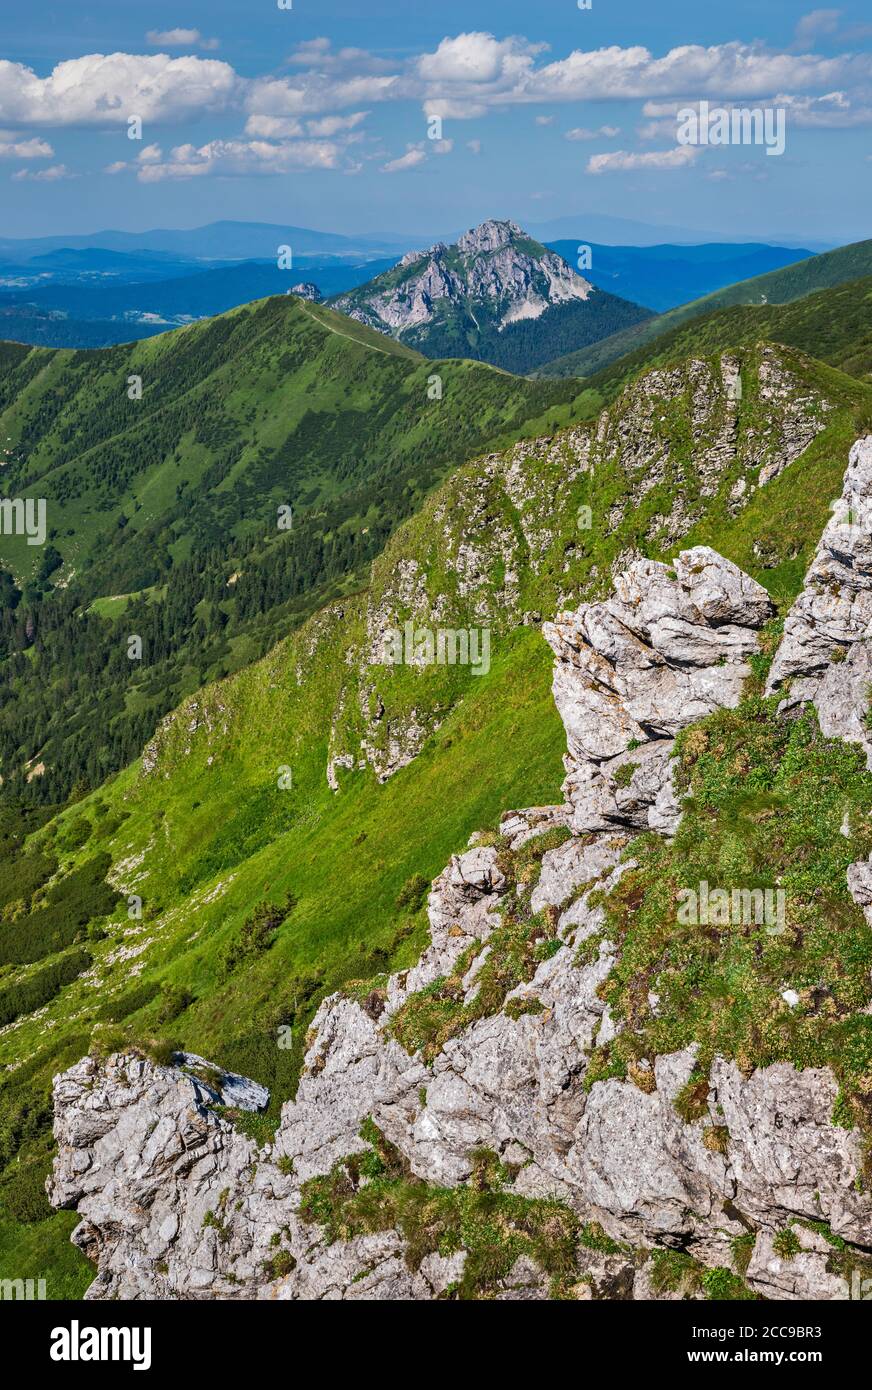 Velky Rozsutec mountain in distance, dolomite-limestone rock formations, trail to Chleb summit, Mala Fatra National Park, Zilina Region, Slovakia Stock Photo